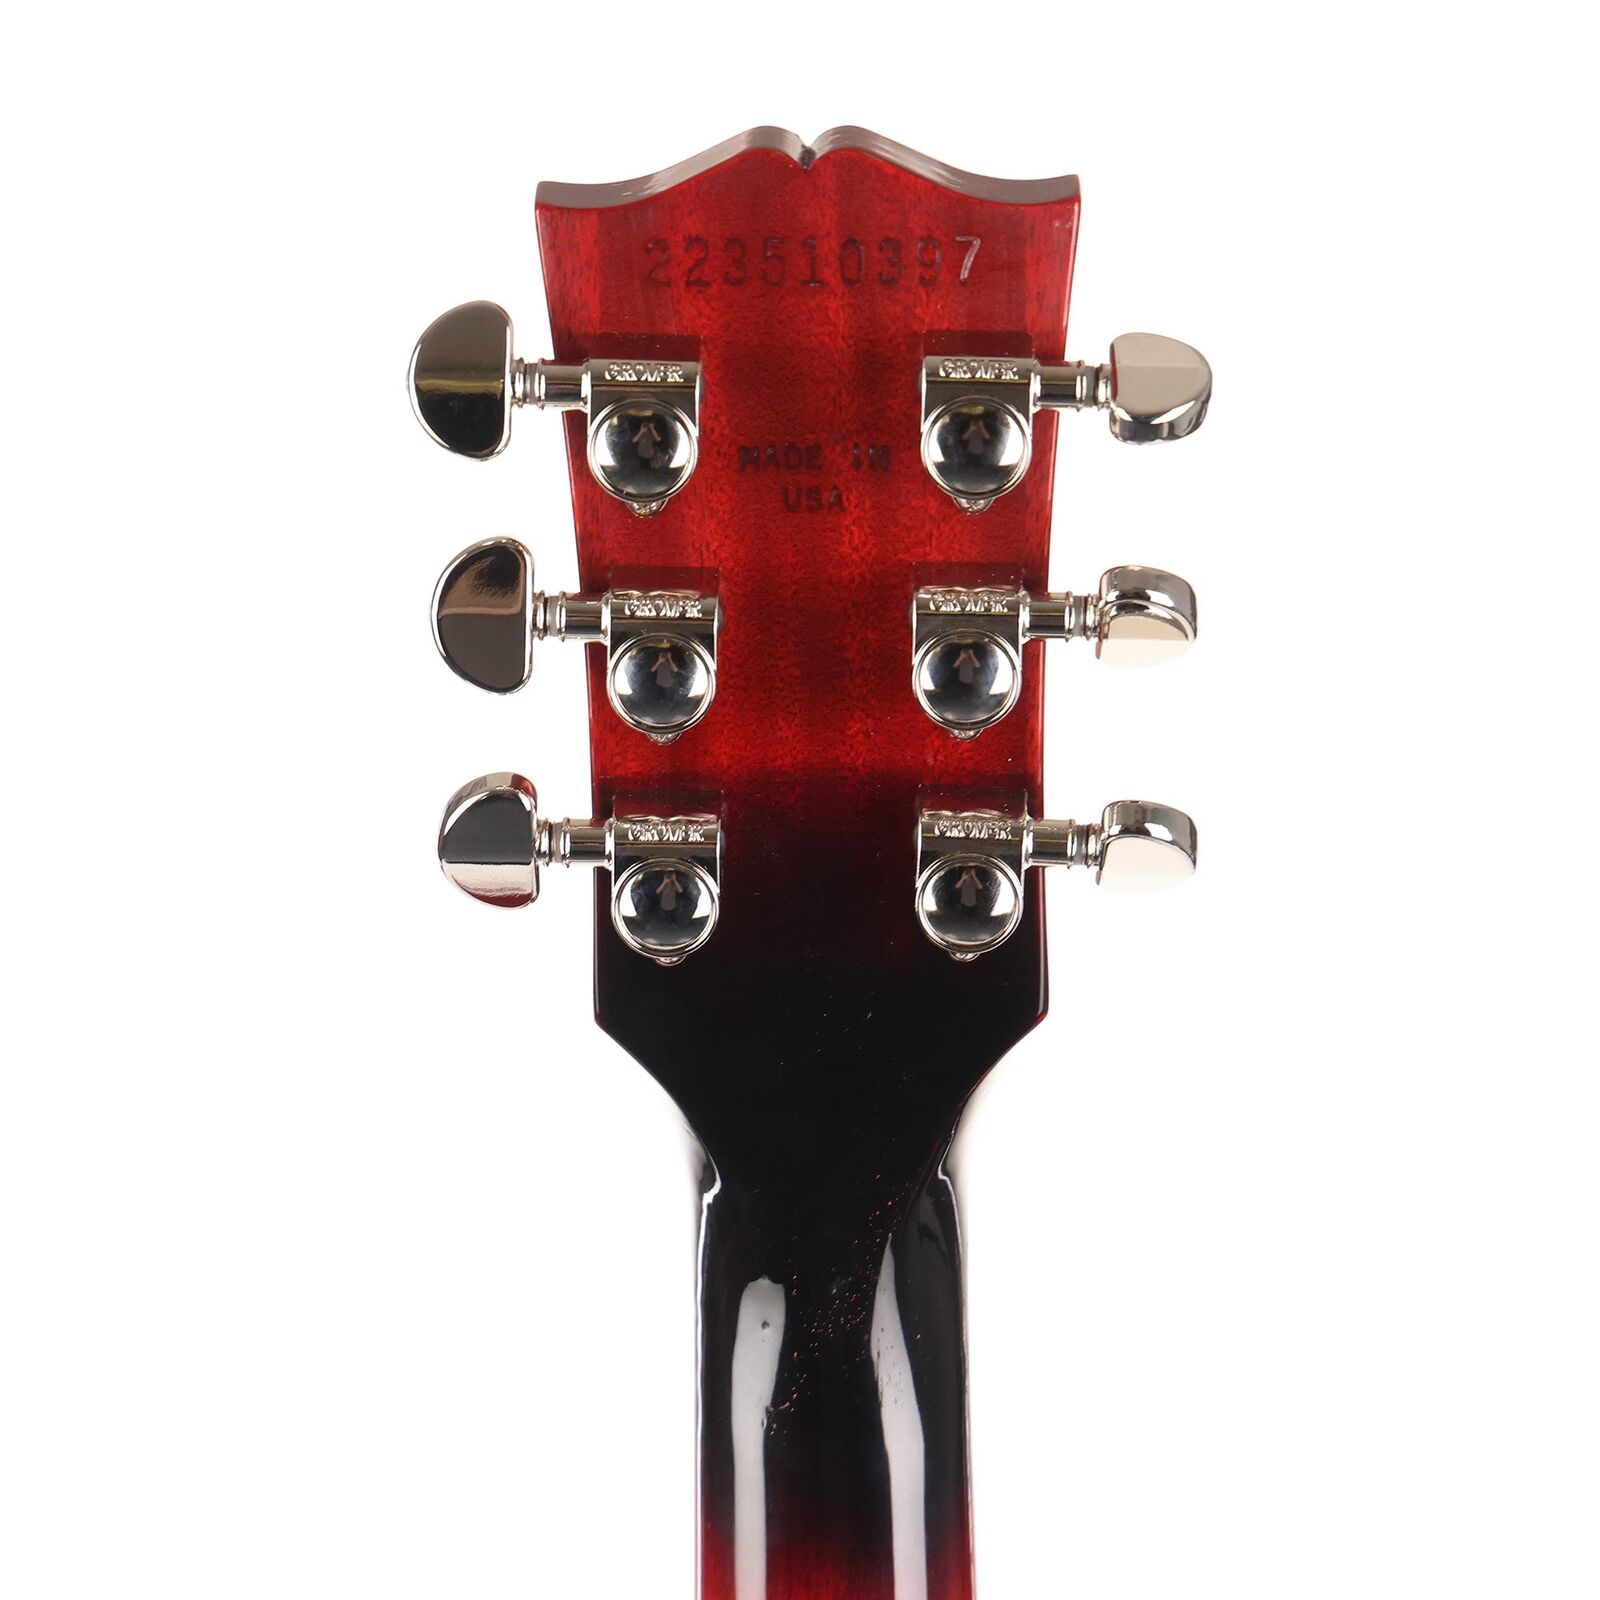 Paul Classic Heritage Cherry Sunburst Headstock Repair Electric Guitar som samma av bilderna